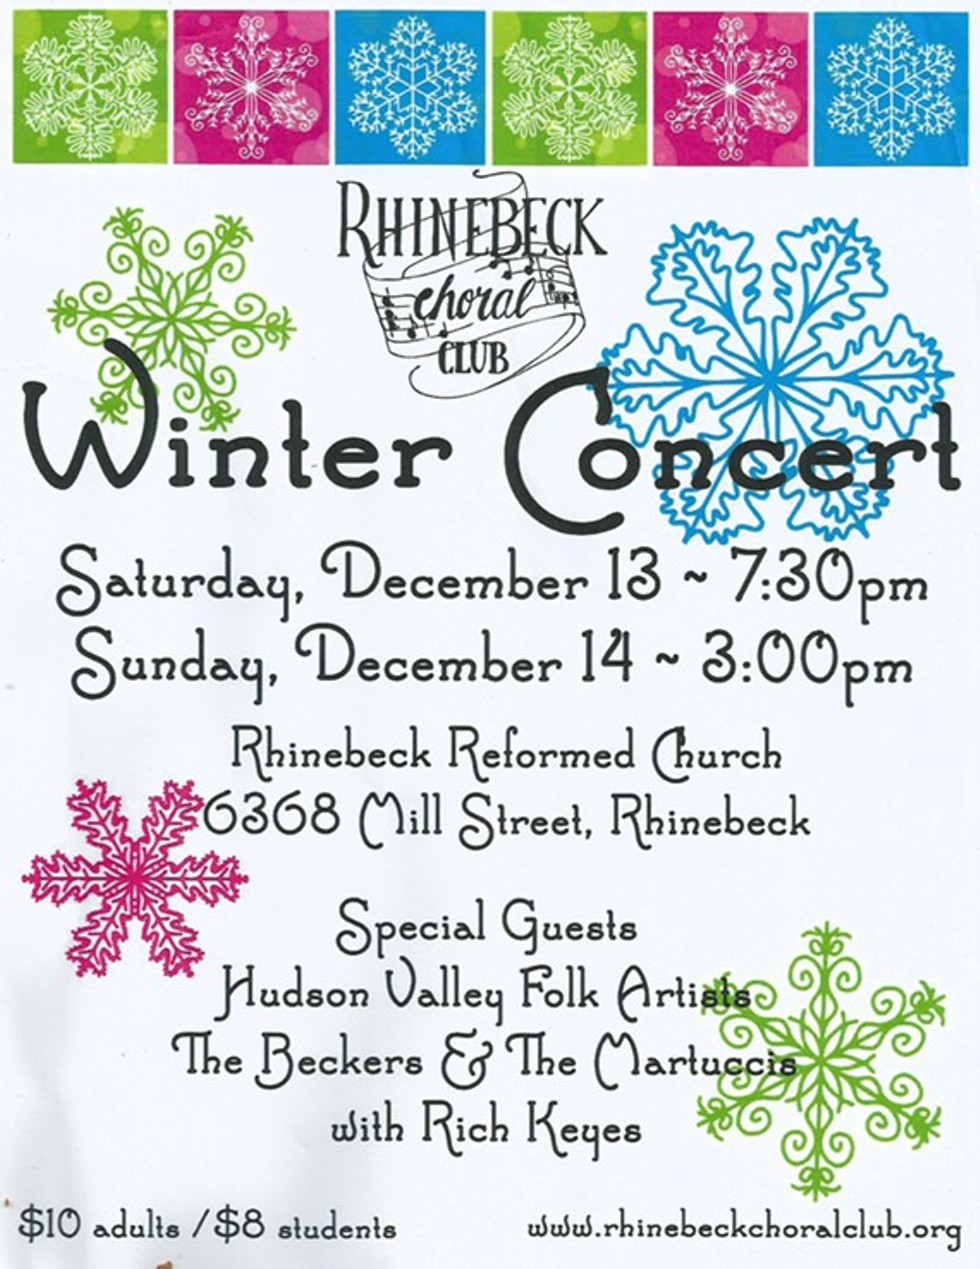 Rhinebeck Choral Club 2014 Winter Concert